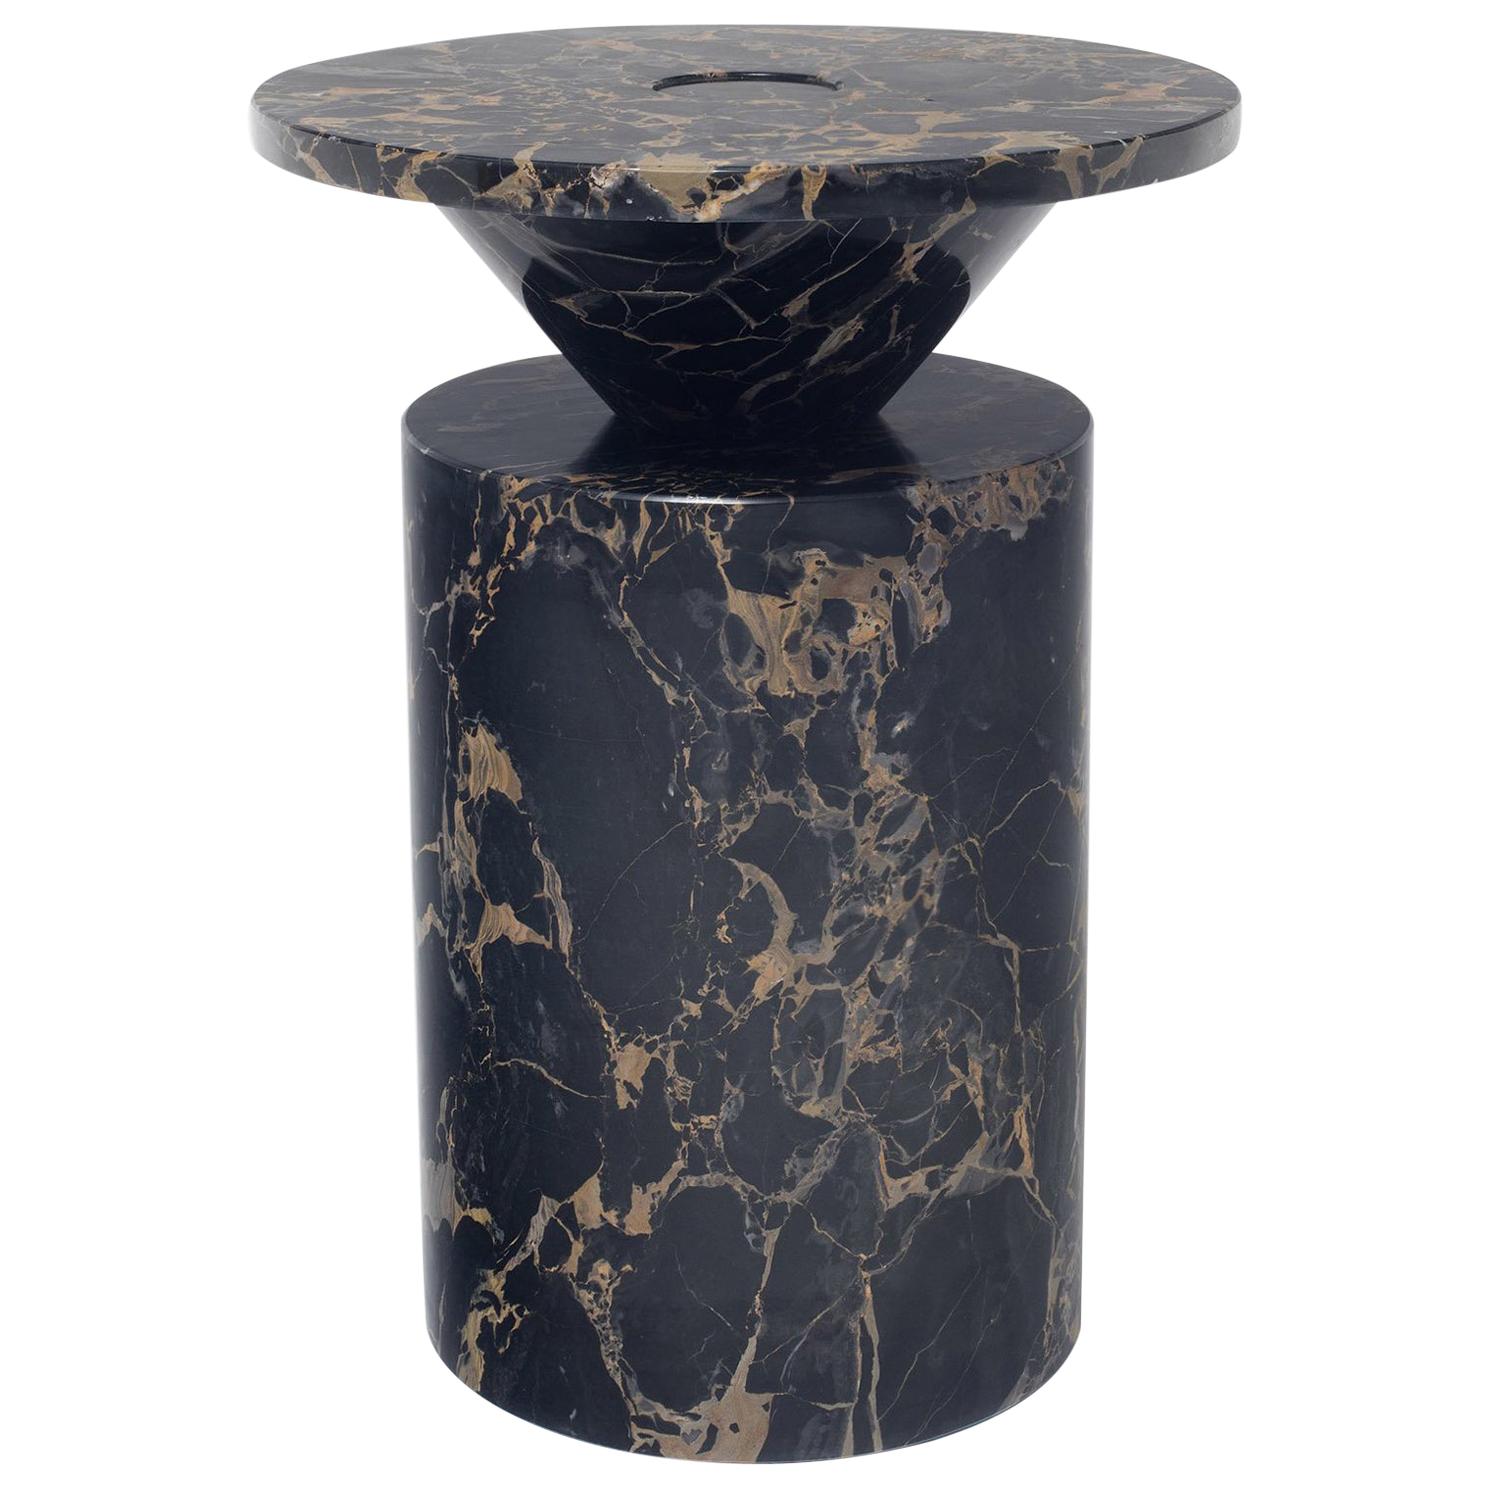 Coffee Table in Black Portoro Marble by Karen Chekerdjian, Numb Ed. Italy, Stock For Sale